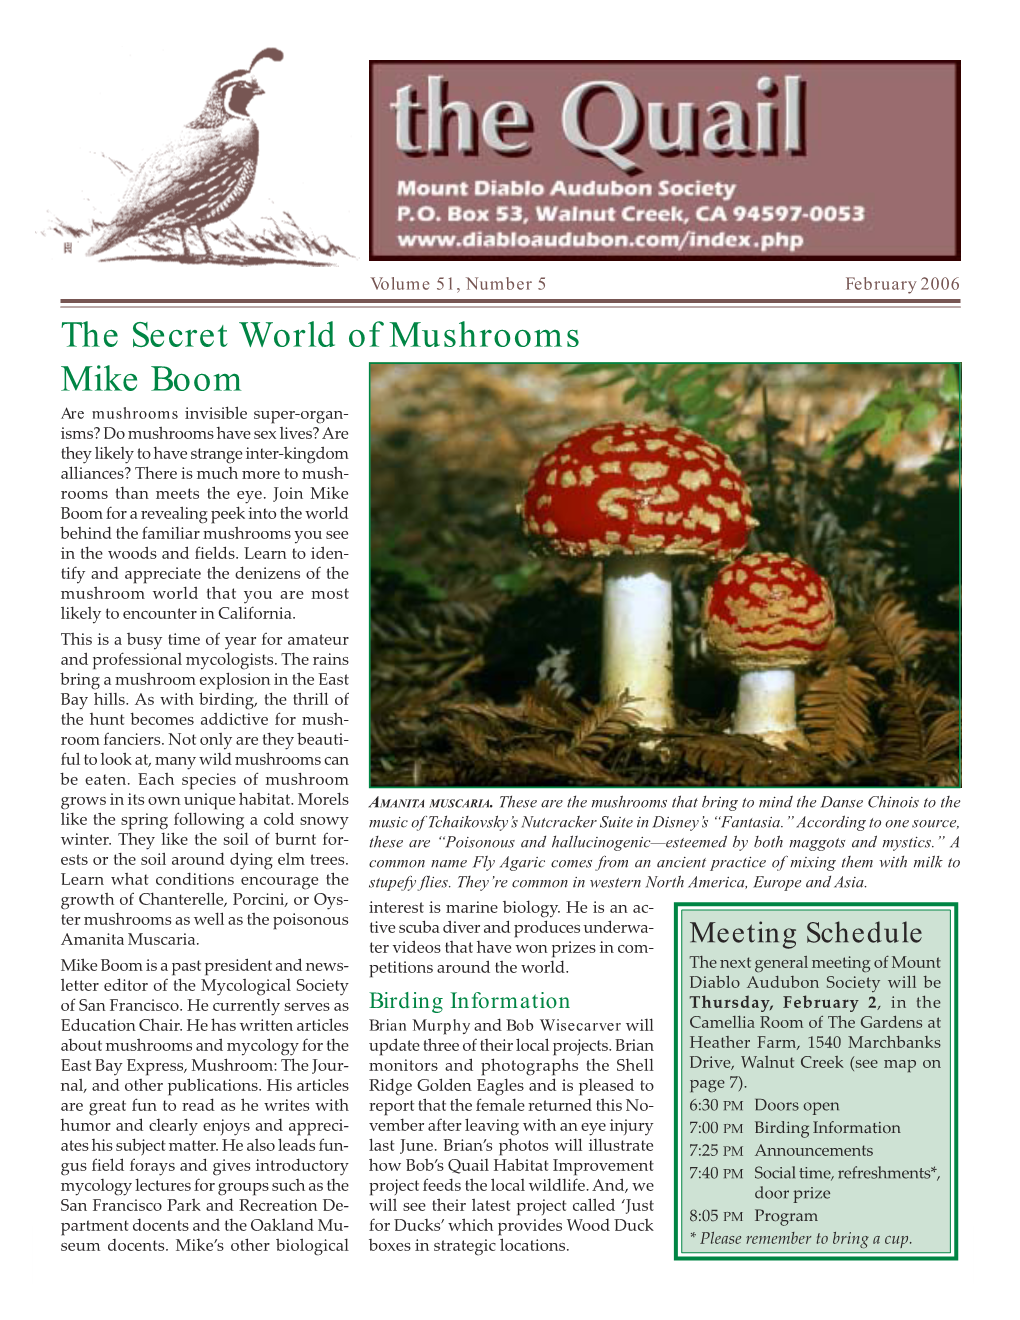 The Secret World of Mushrooms Mike Boom